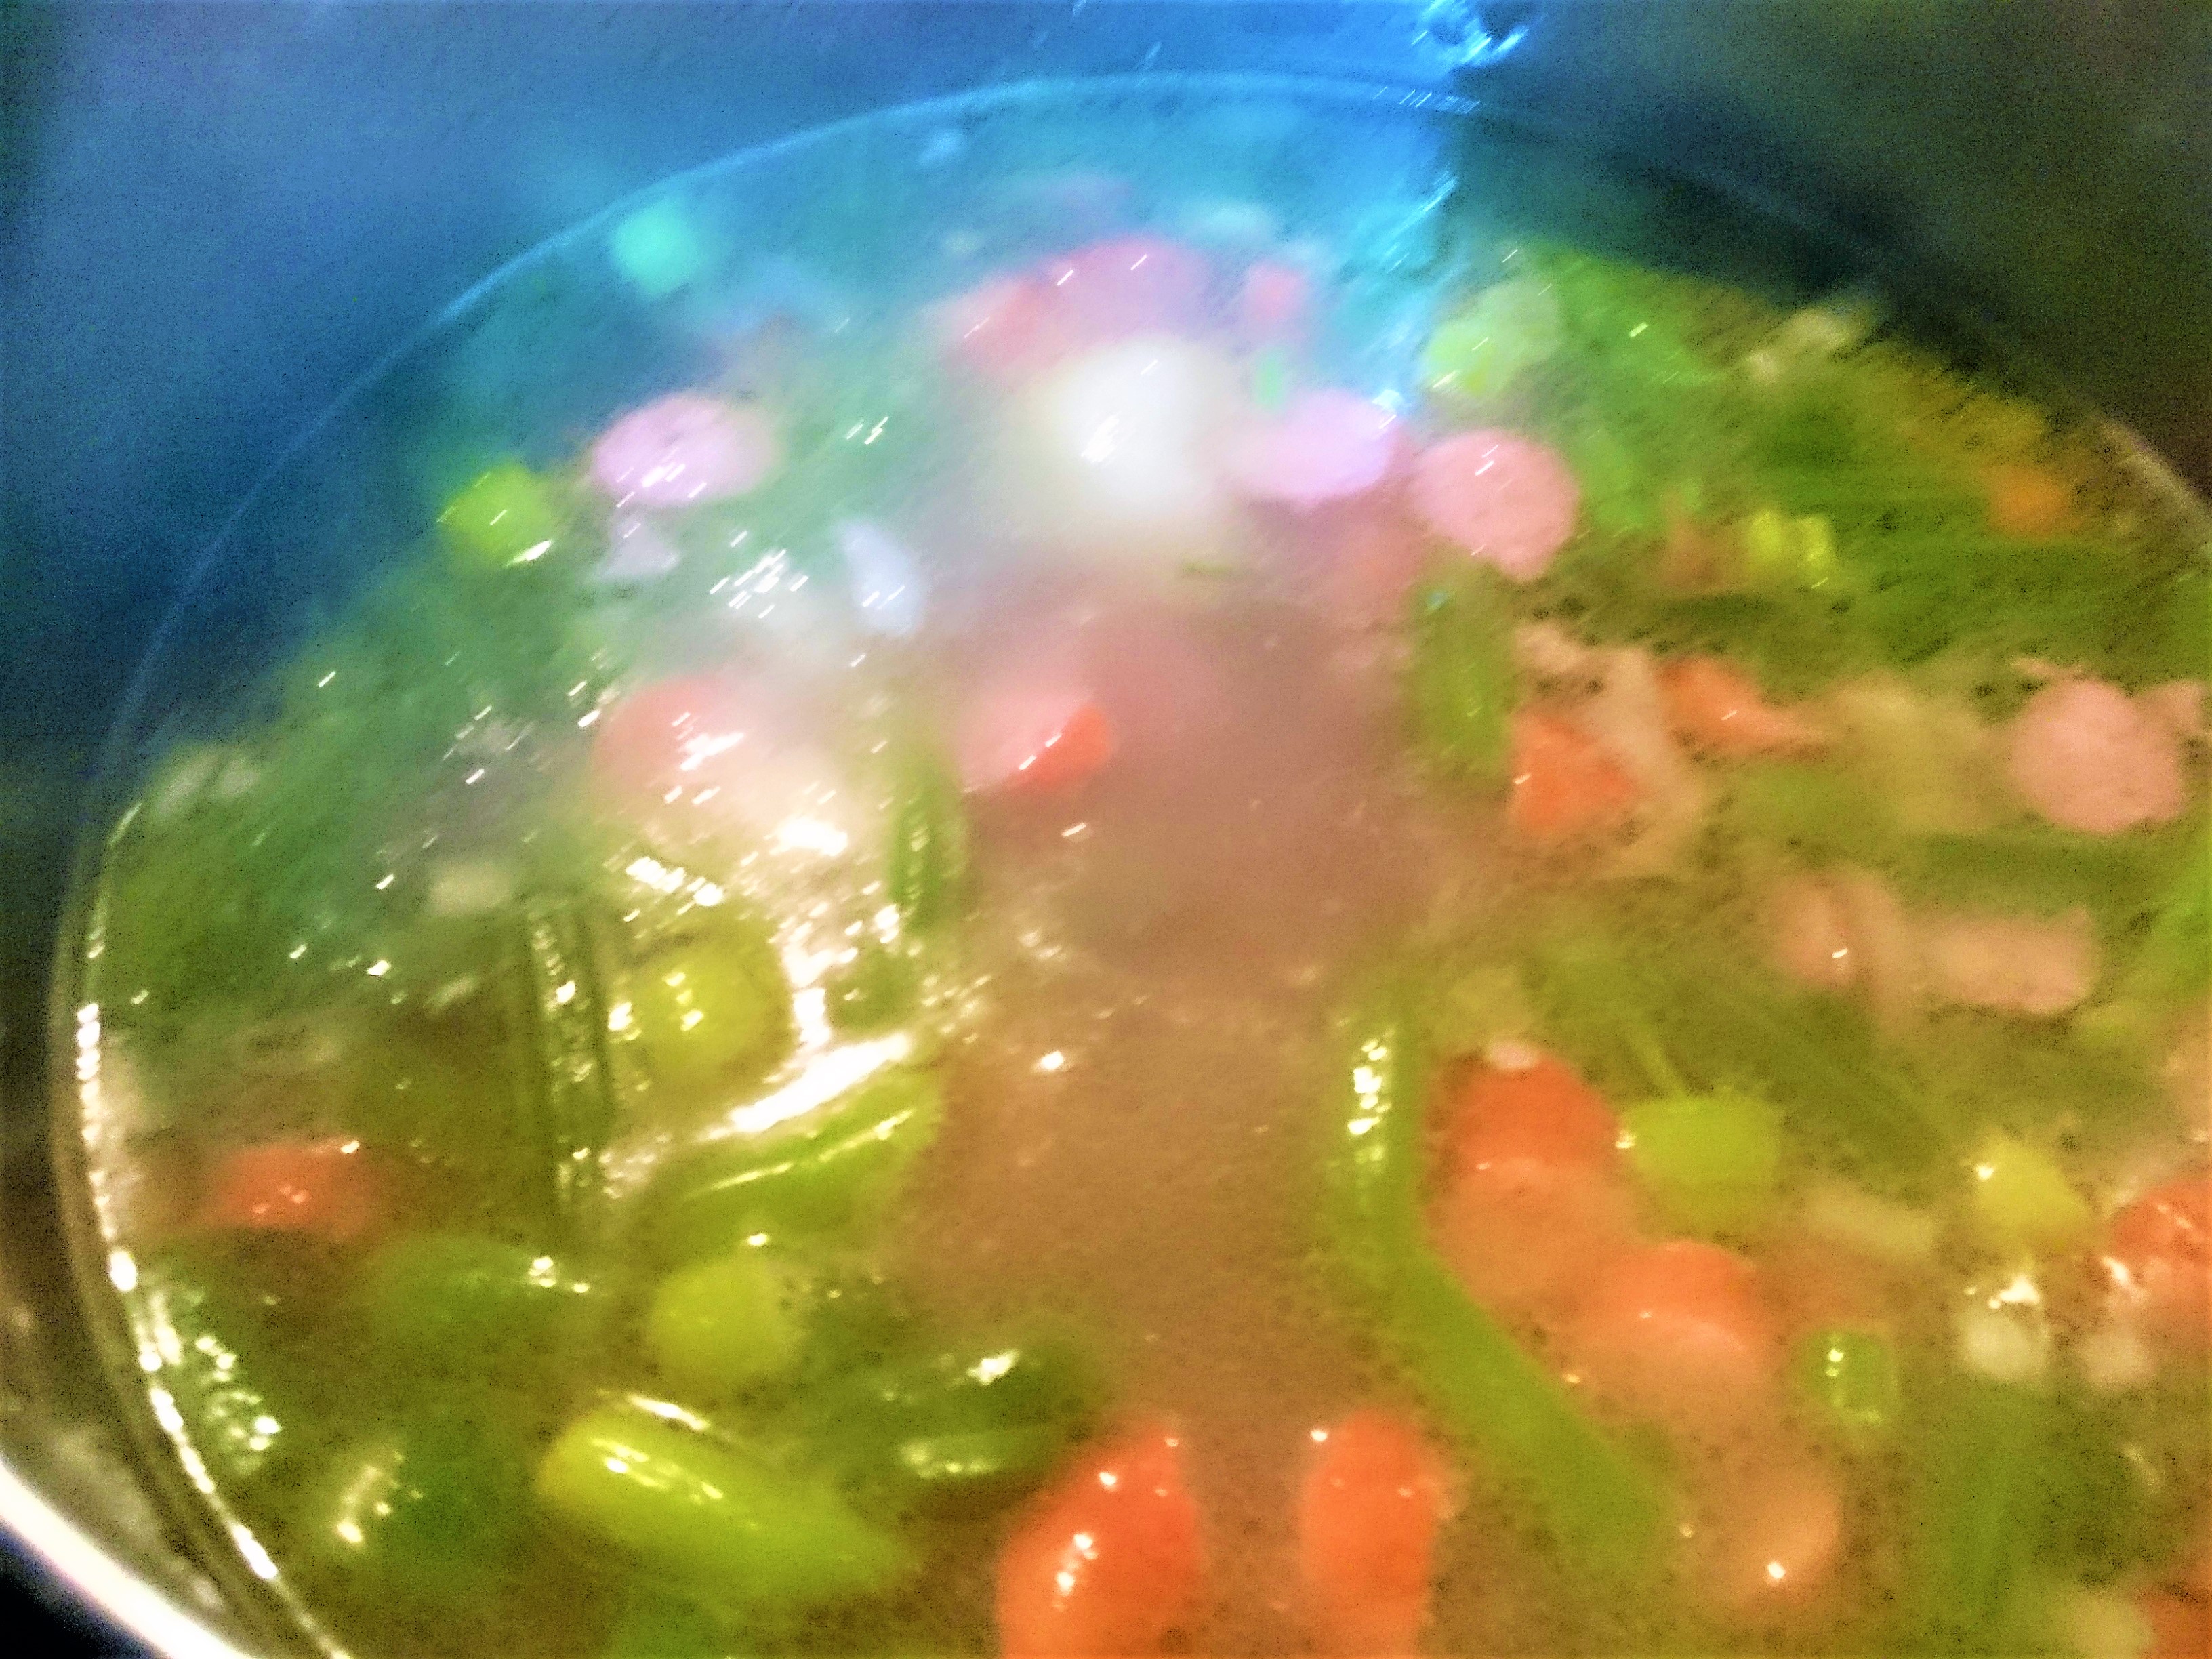 Supa cu legume verzi, linte si iaurt